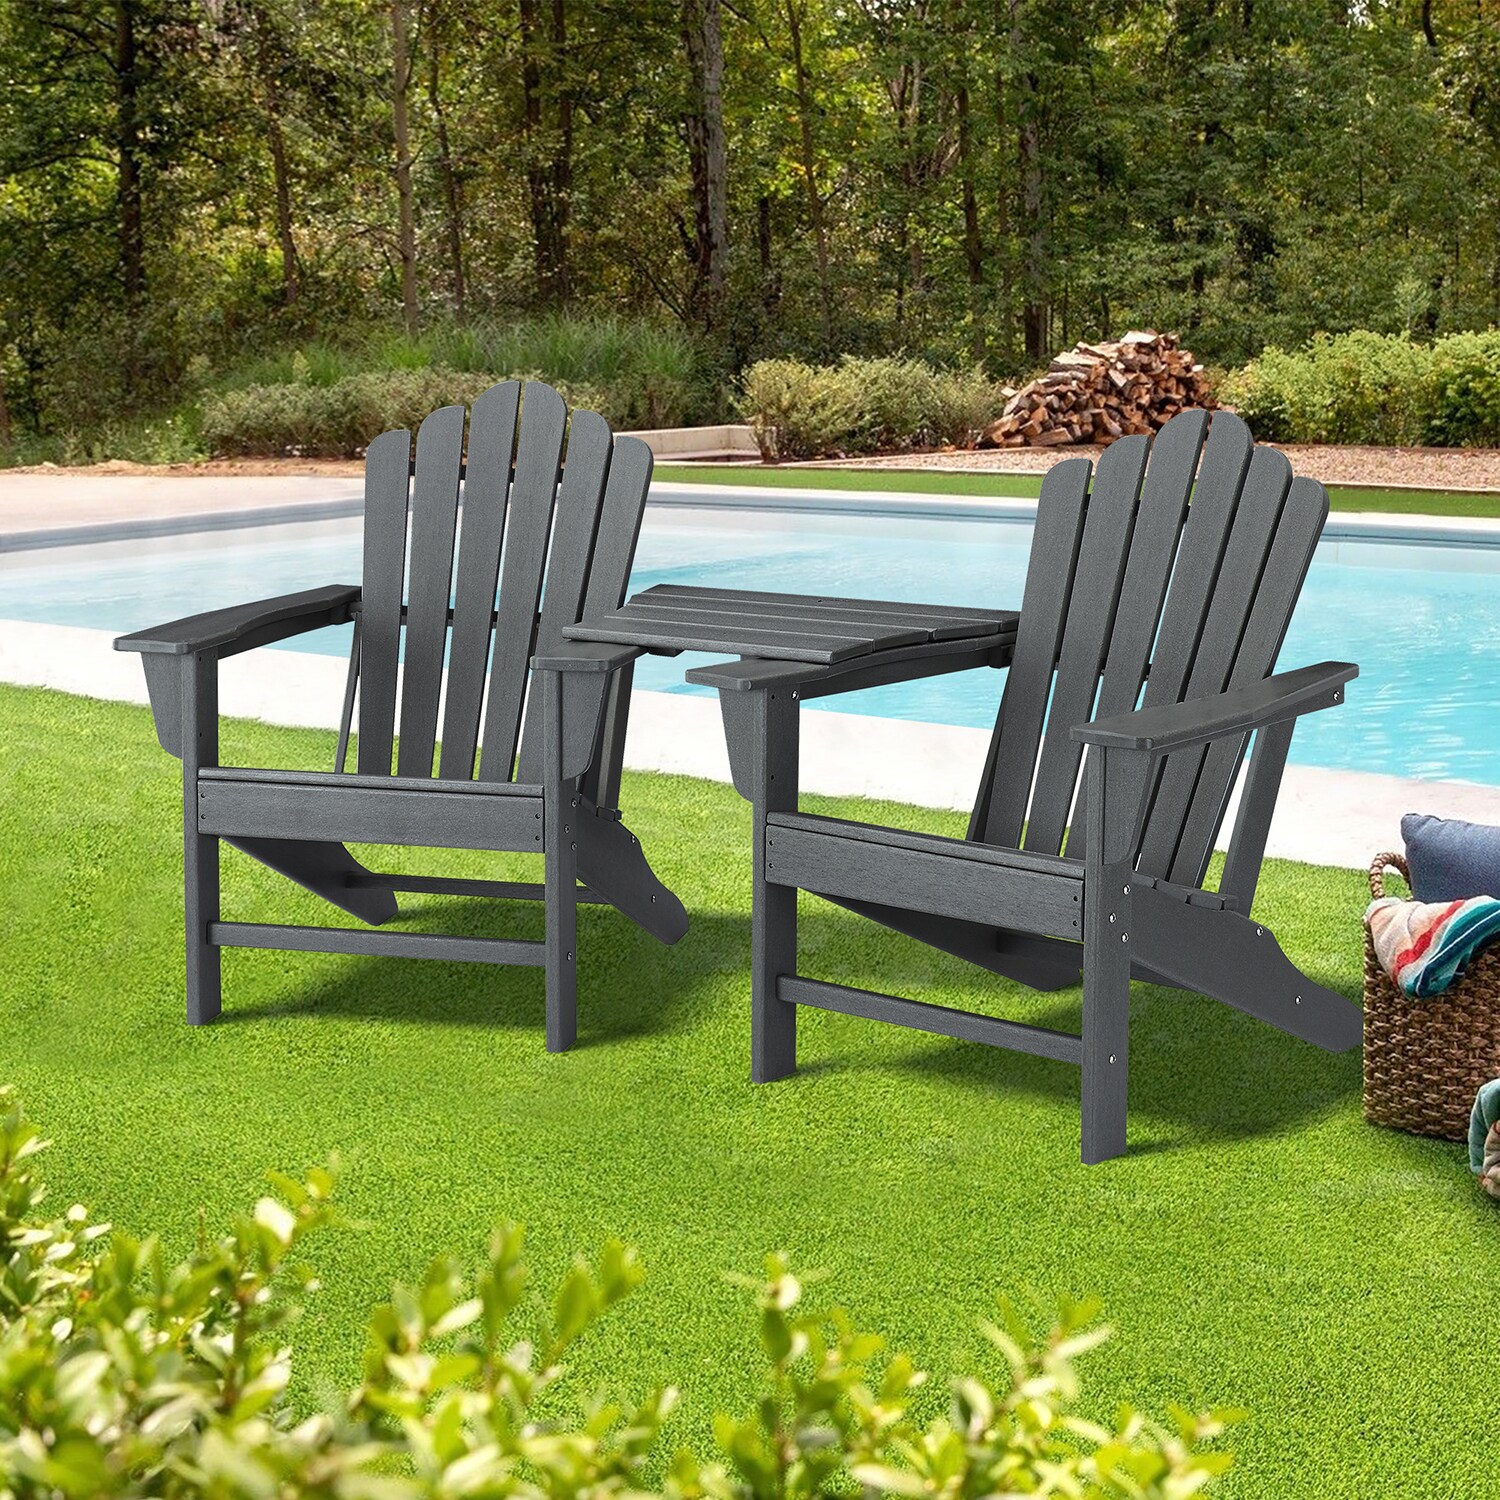 Patio Bench Outdoor Lawn Garden Porch Chair Kit Sand Durable Resin Frame New 